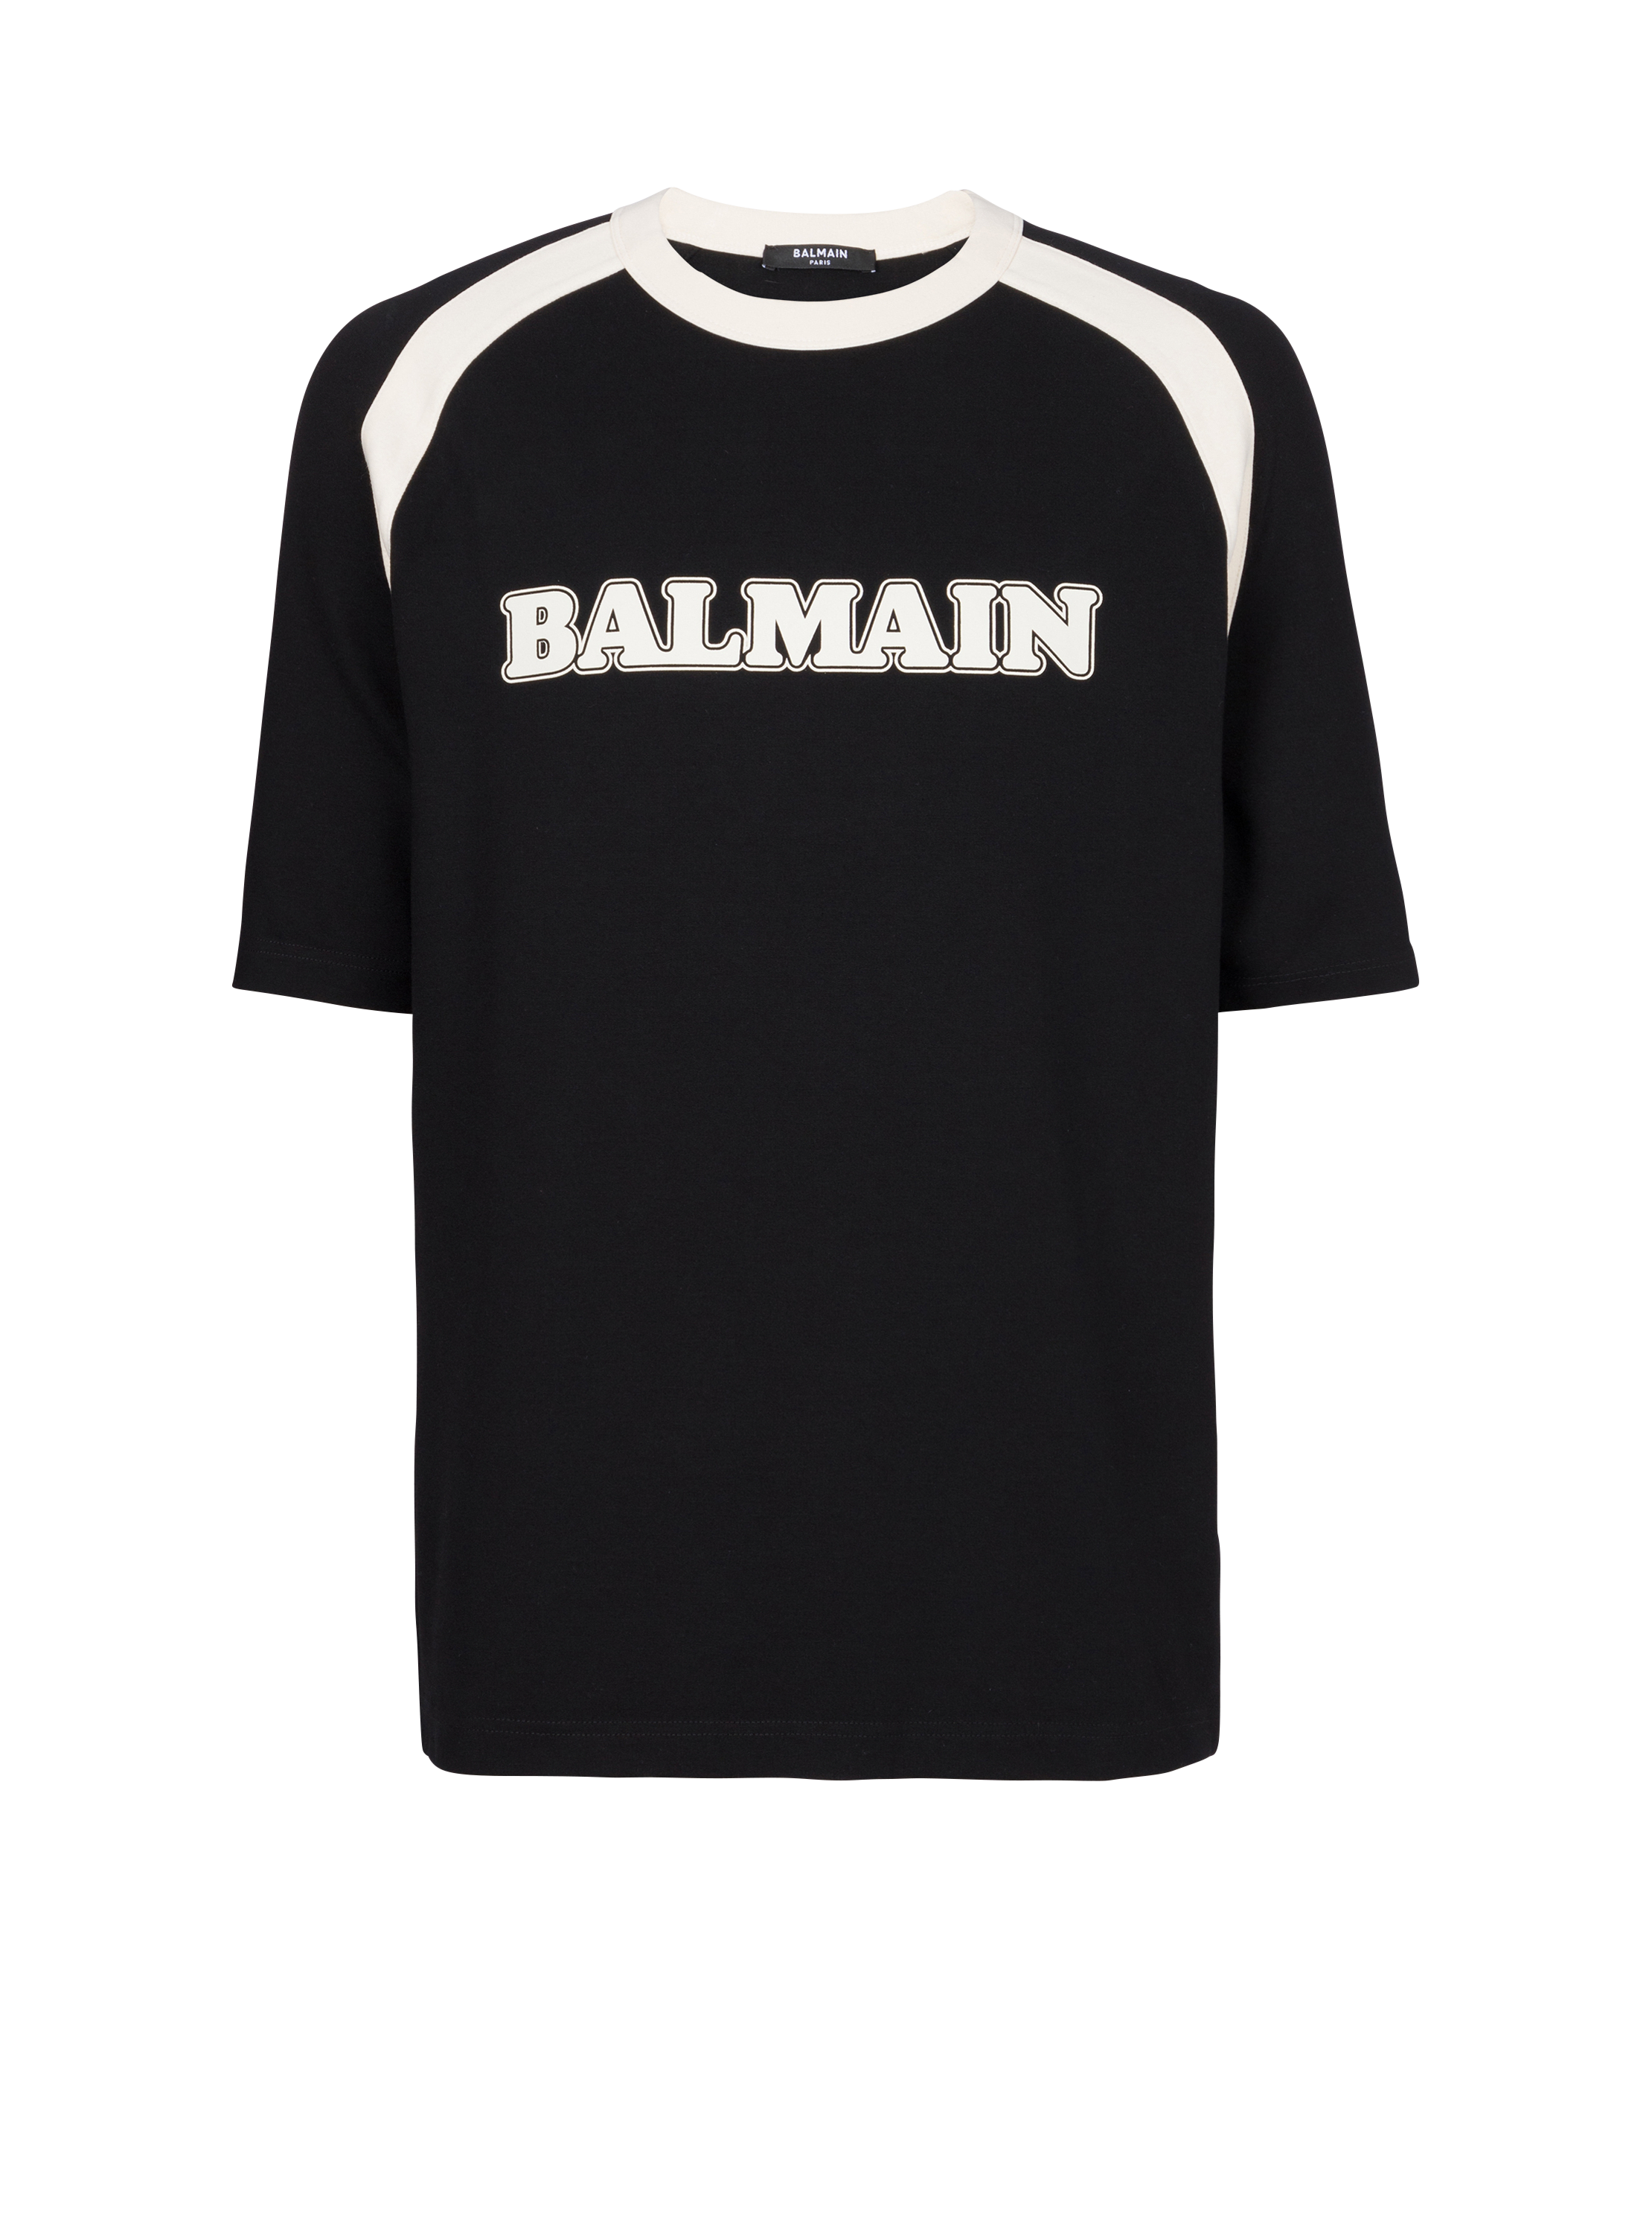 Camiseta retro Balmain, negro, hi-res